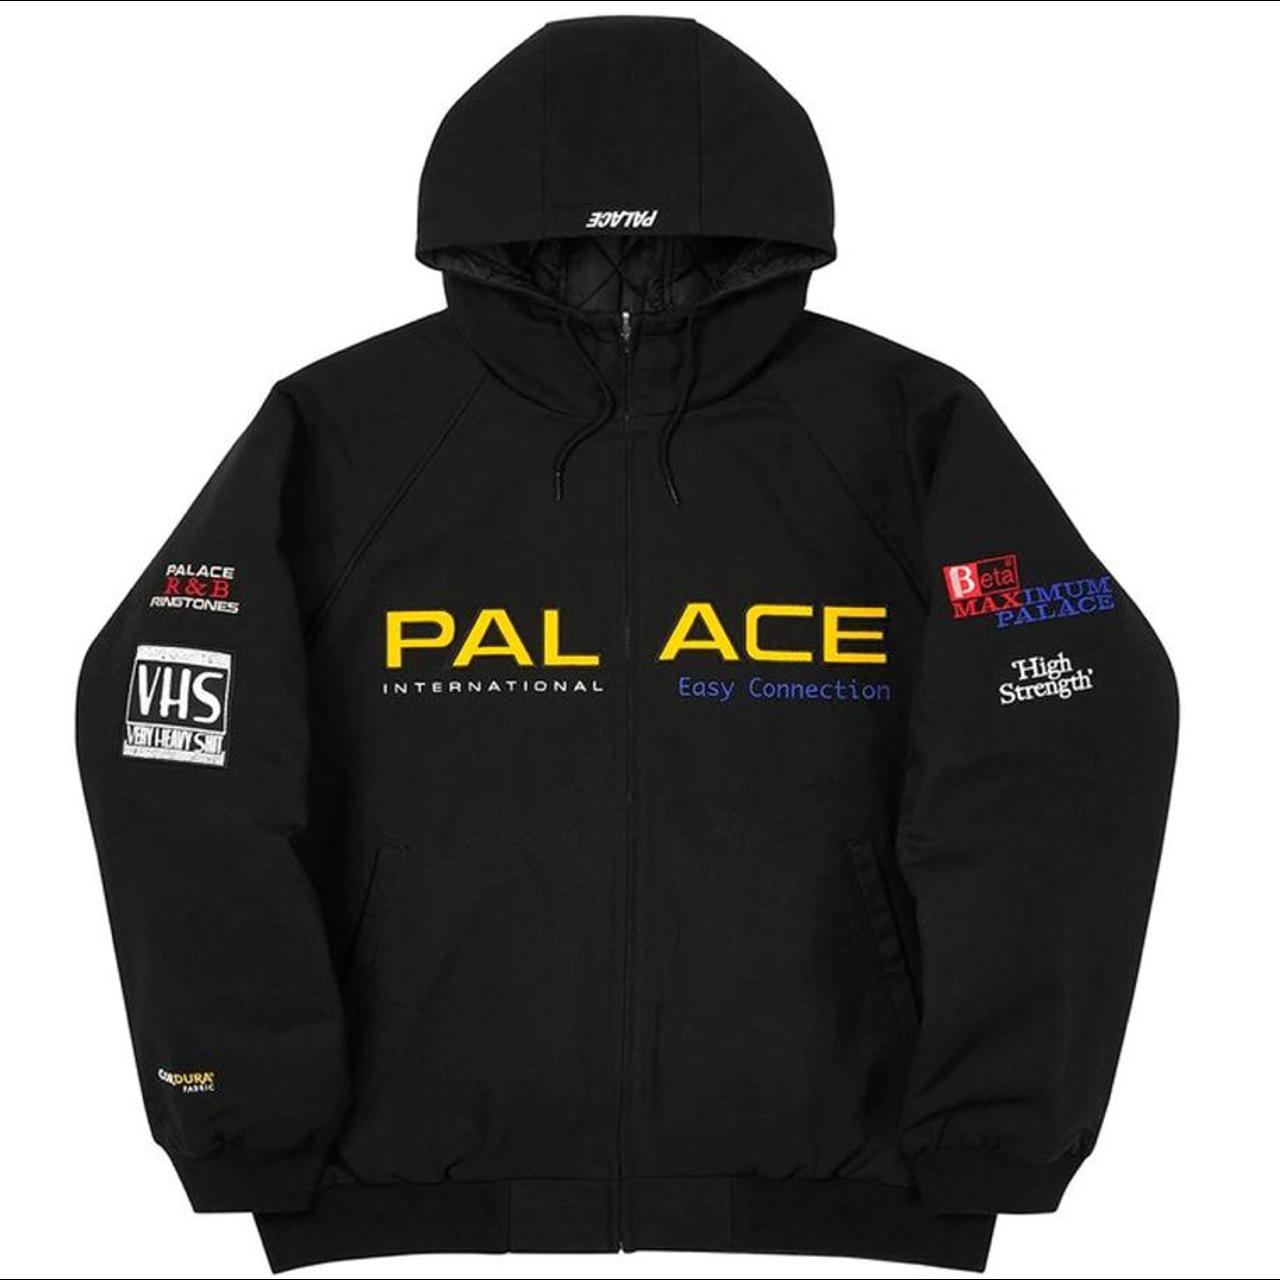 数量限定・即納特価!! palace One 2 One Reversible Jacket 